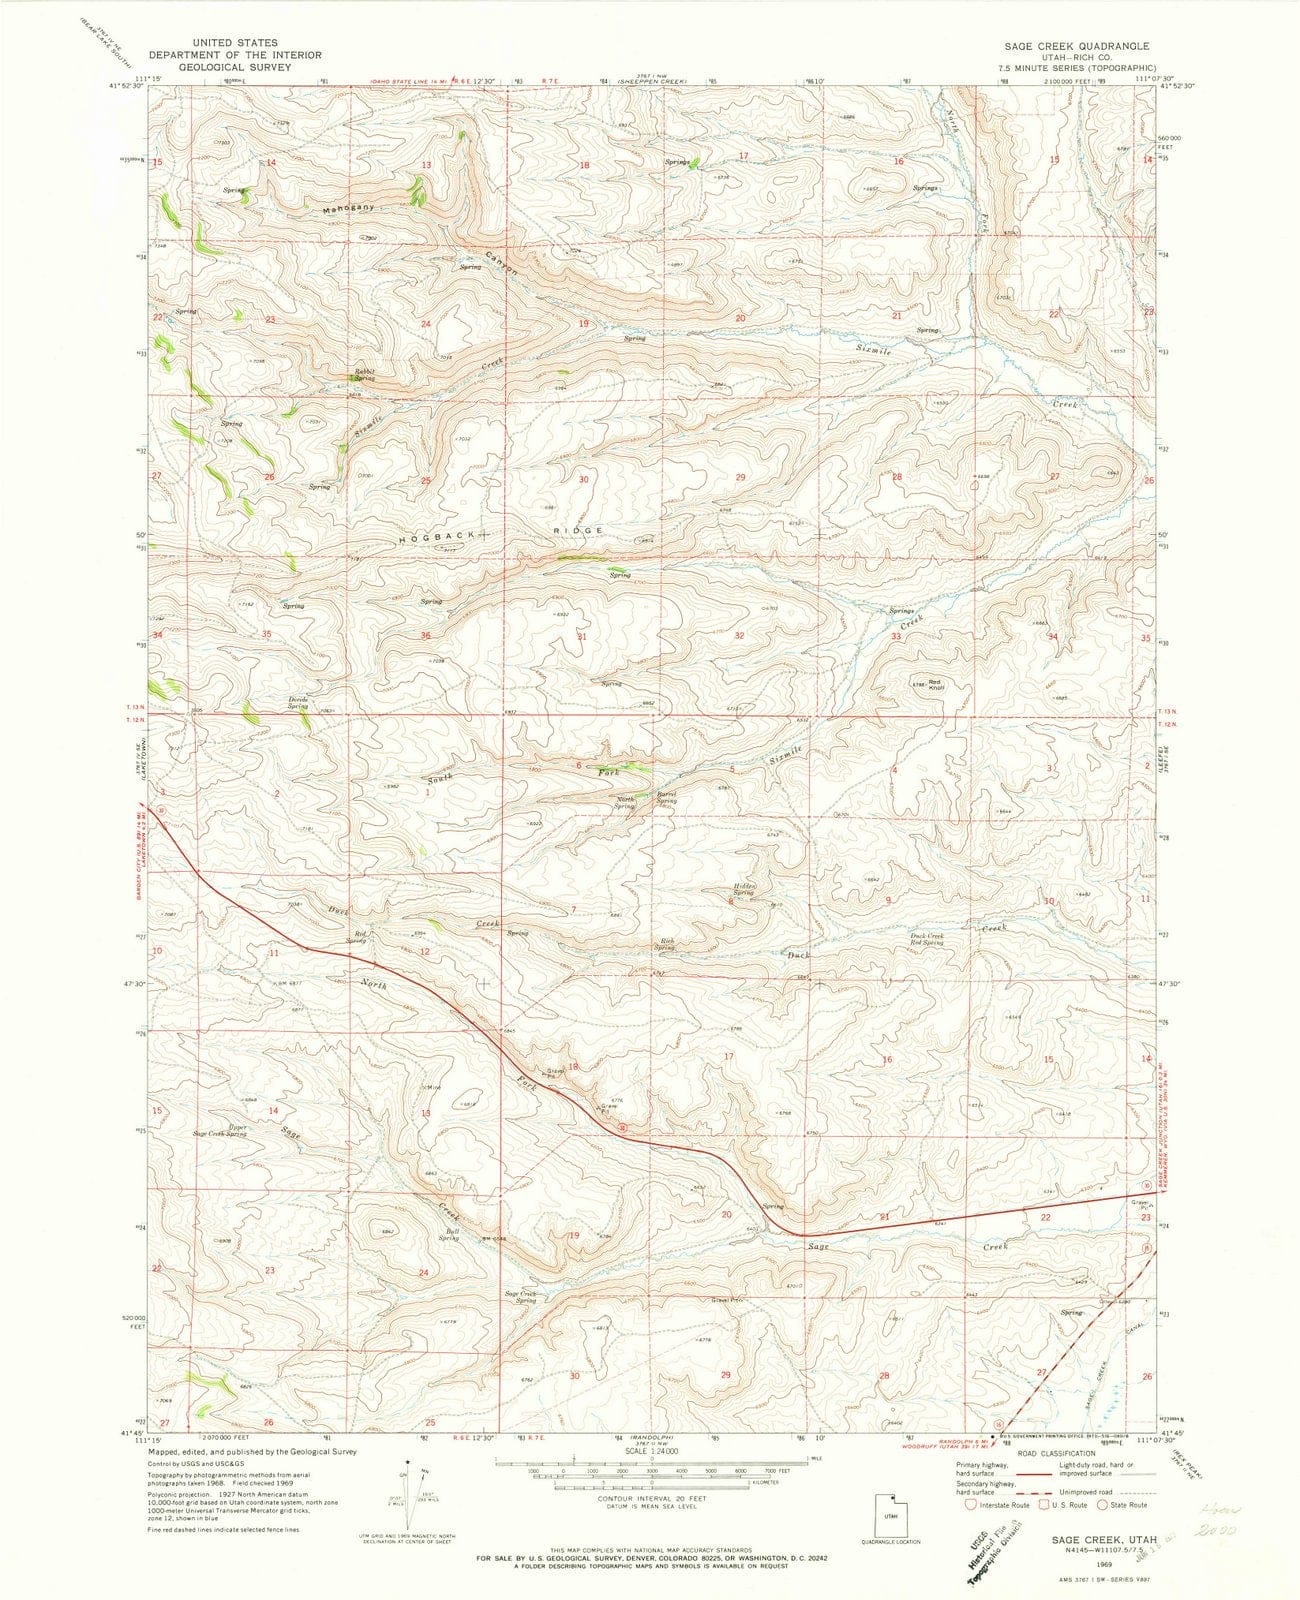 1969 Sage Creek, UT - Utah - USGS Topographic Map